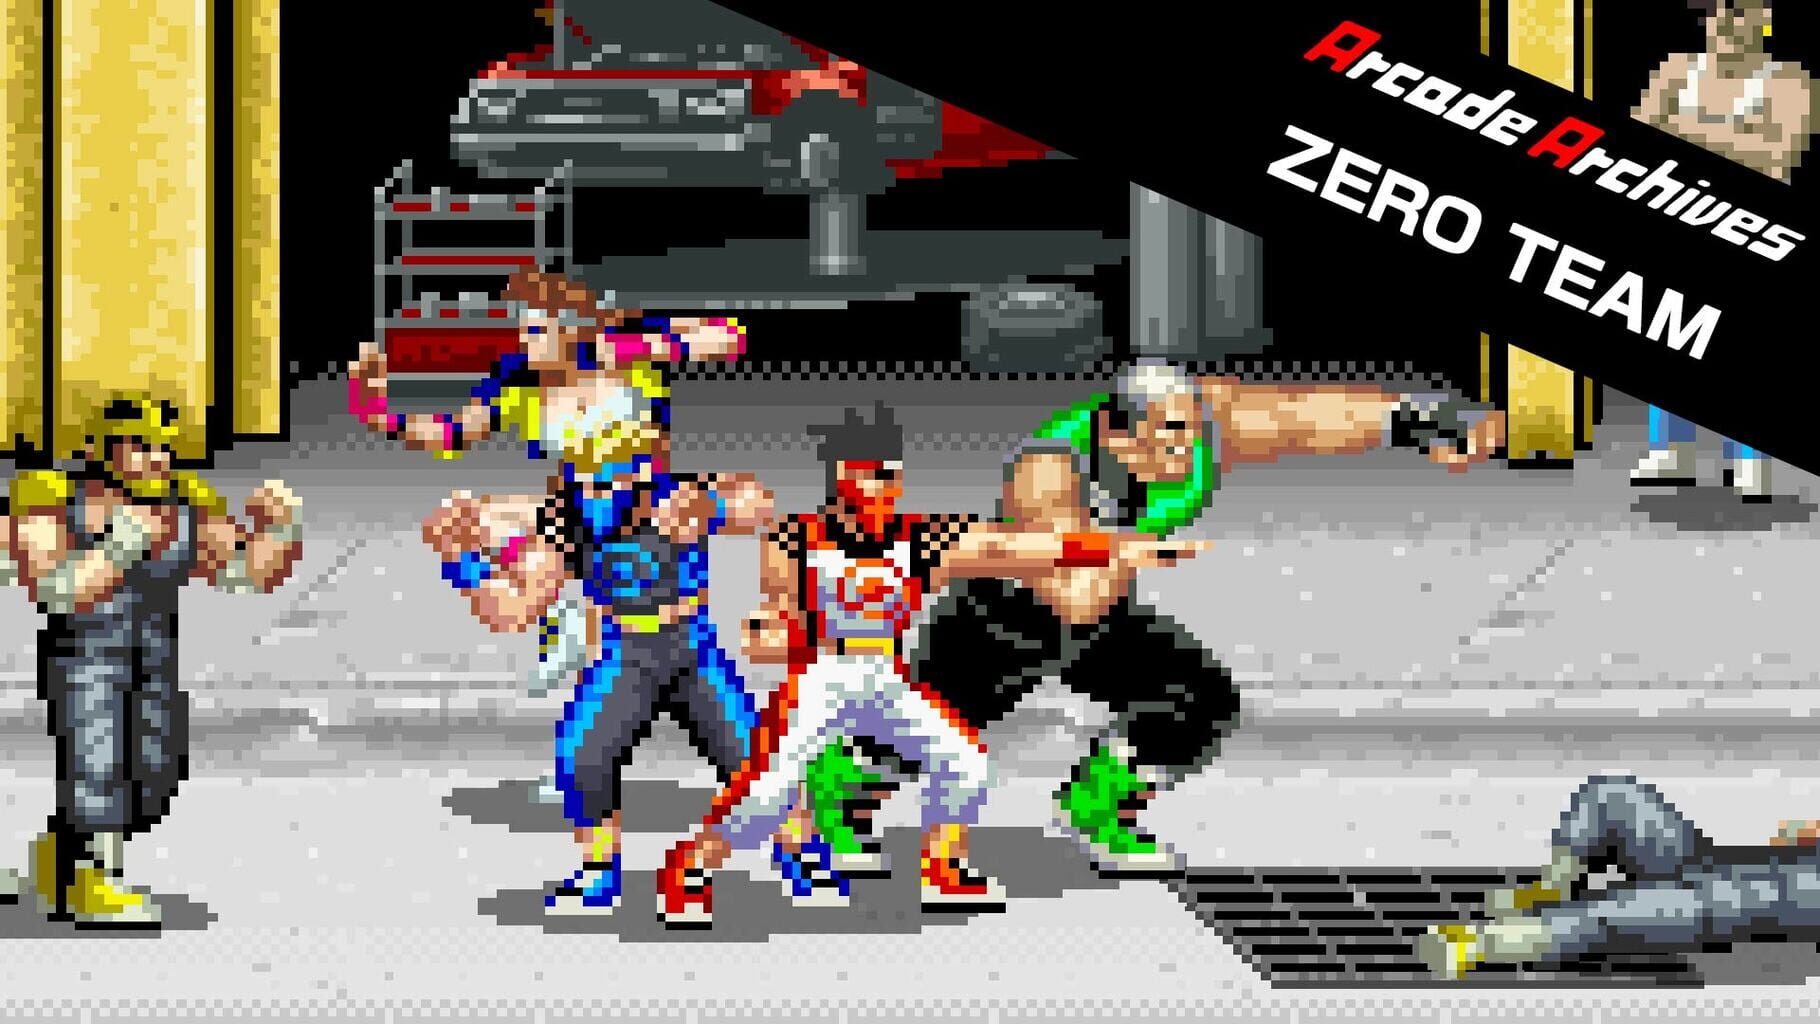 Arcade Archives: Zero Team artwork